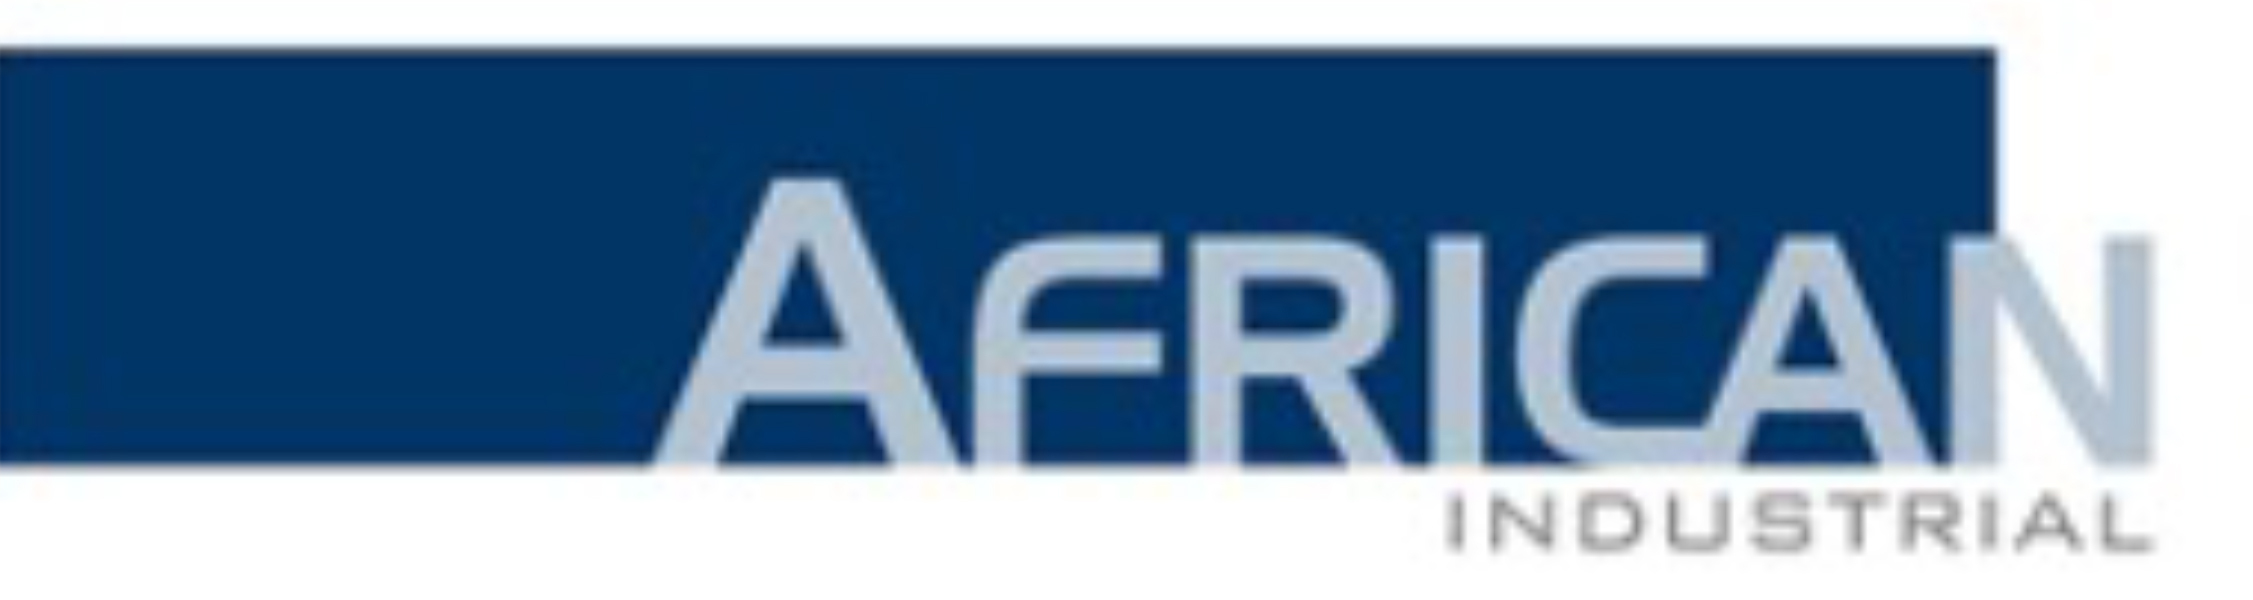 African Industrial logo